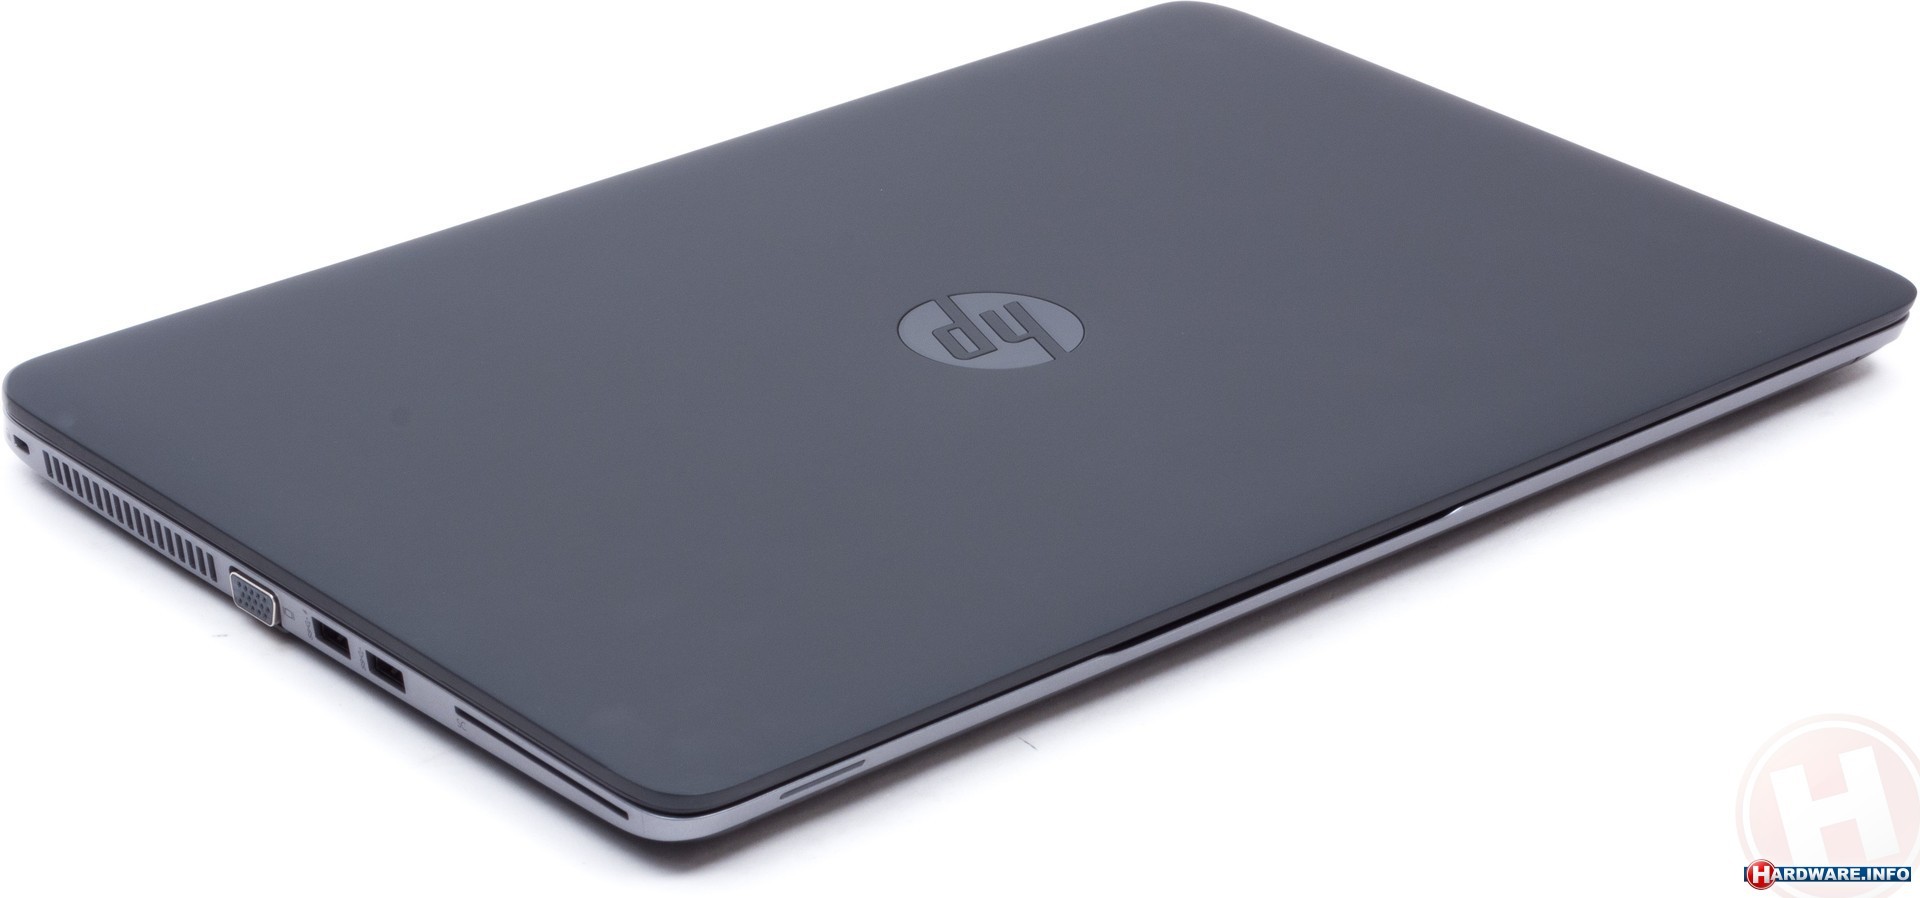 Laptop Cũ HP Elitebook 850 G1 (Core i5 4300U, 4GB, 250GB, VGA 15'6_000